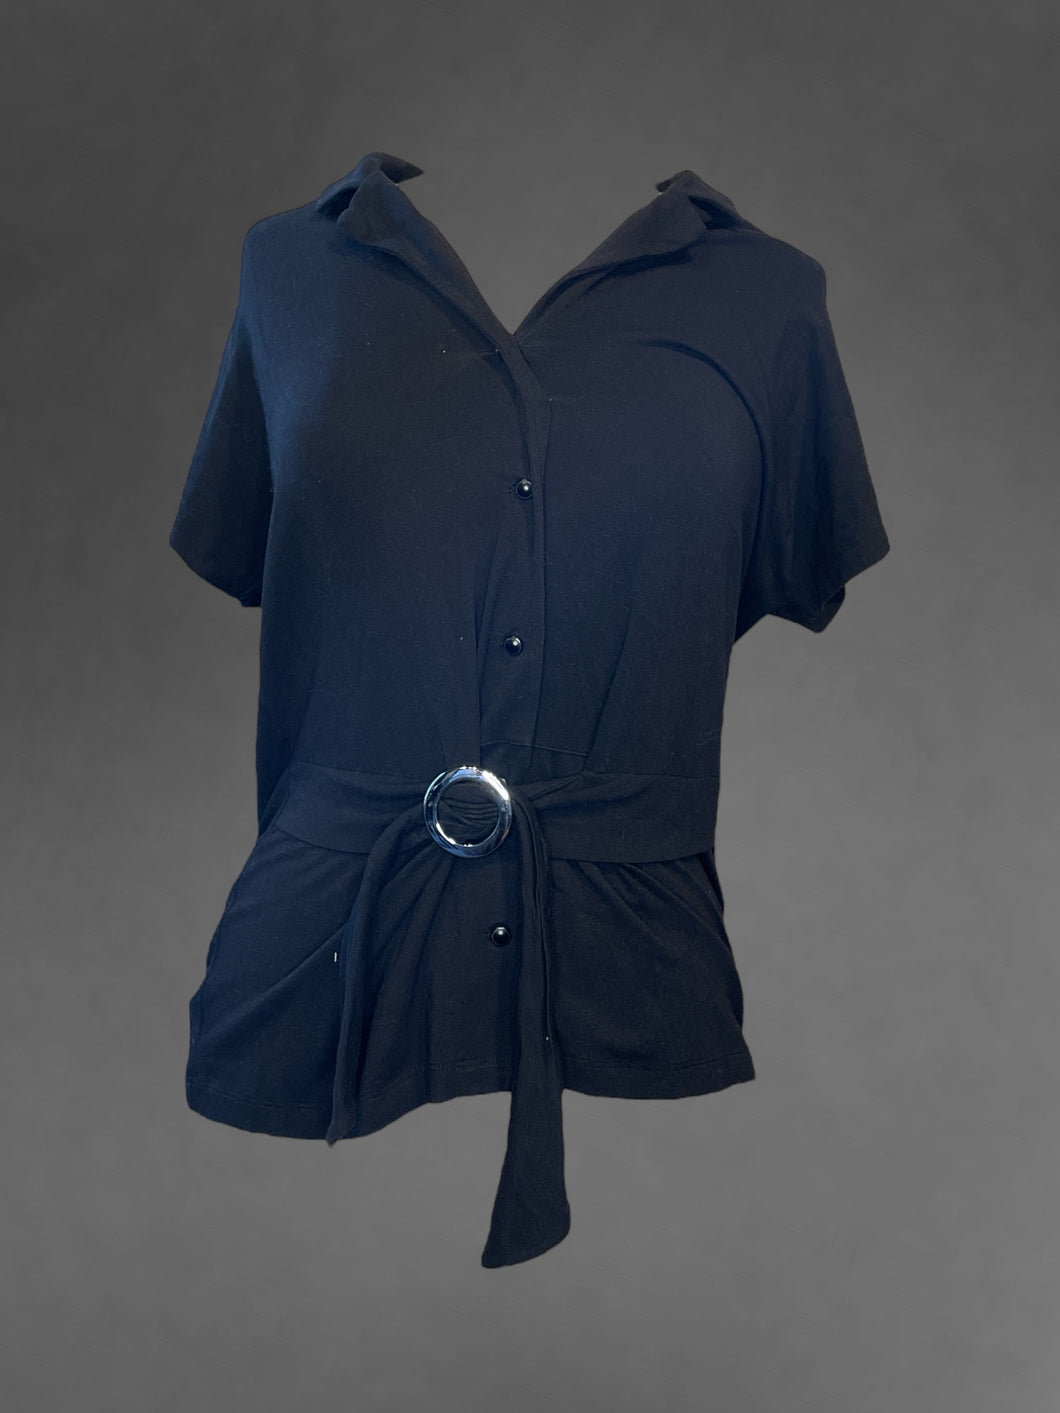 L Black button up short batwing top w/ collar, & built-in slider belt